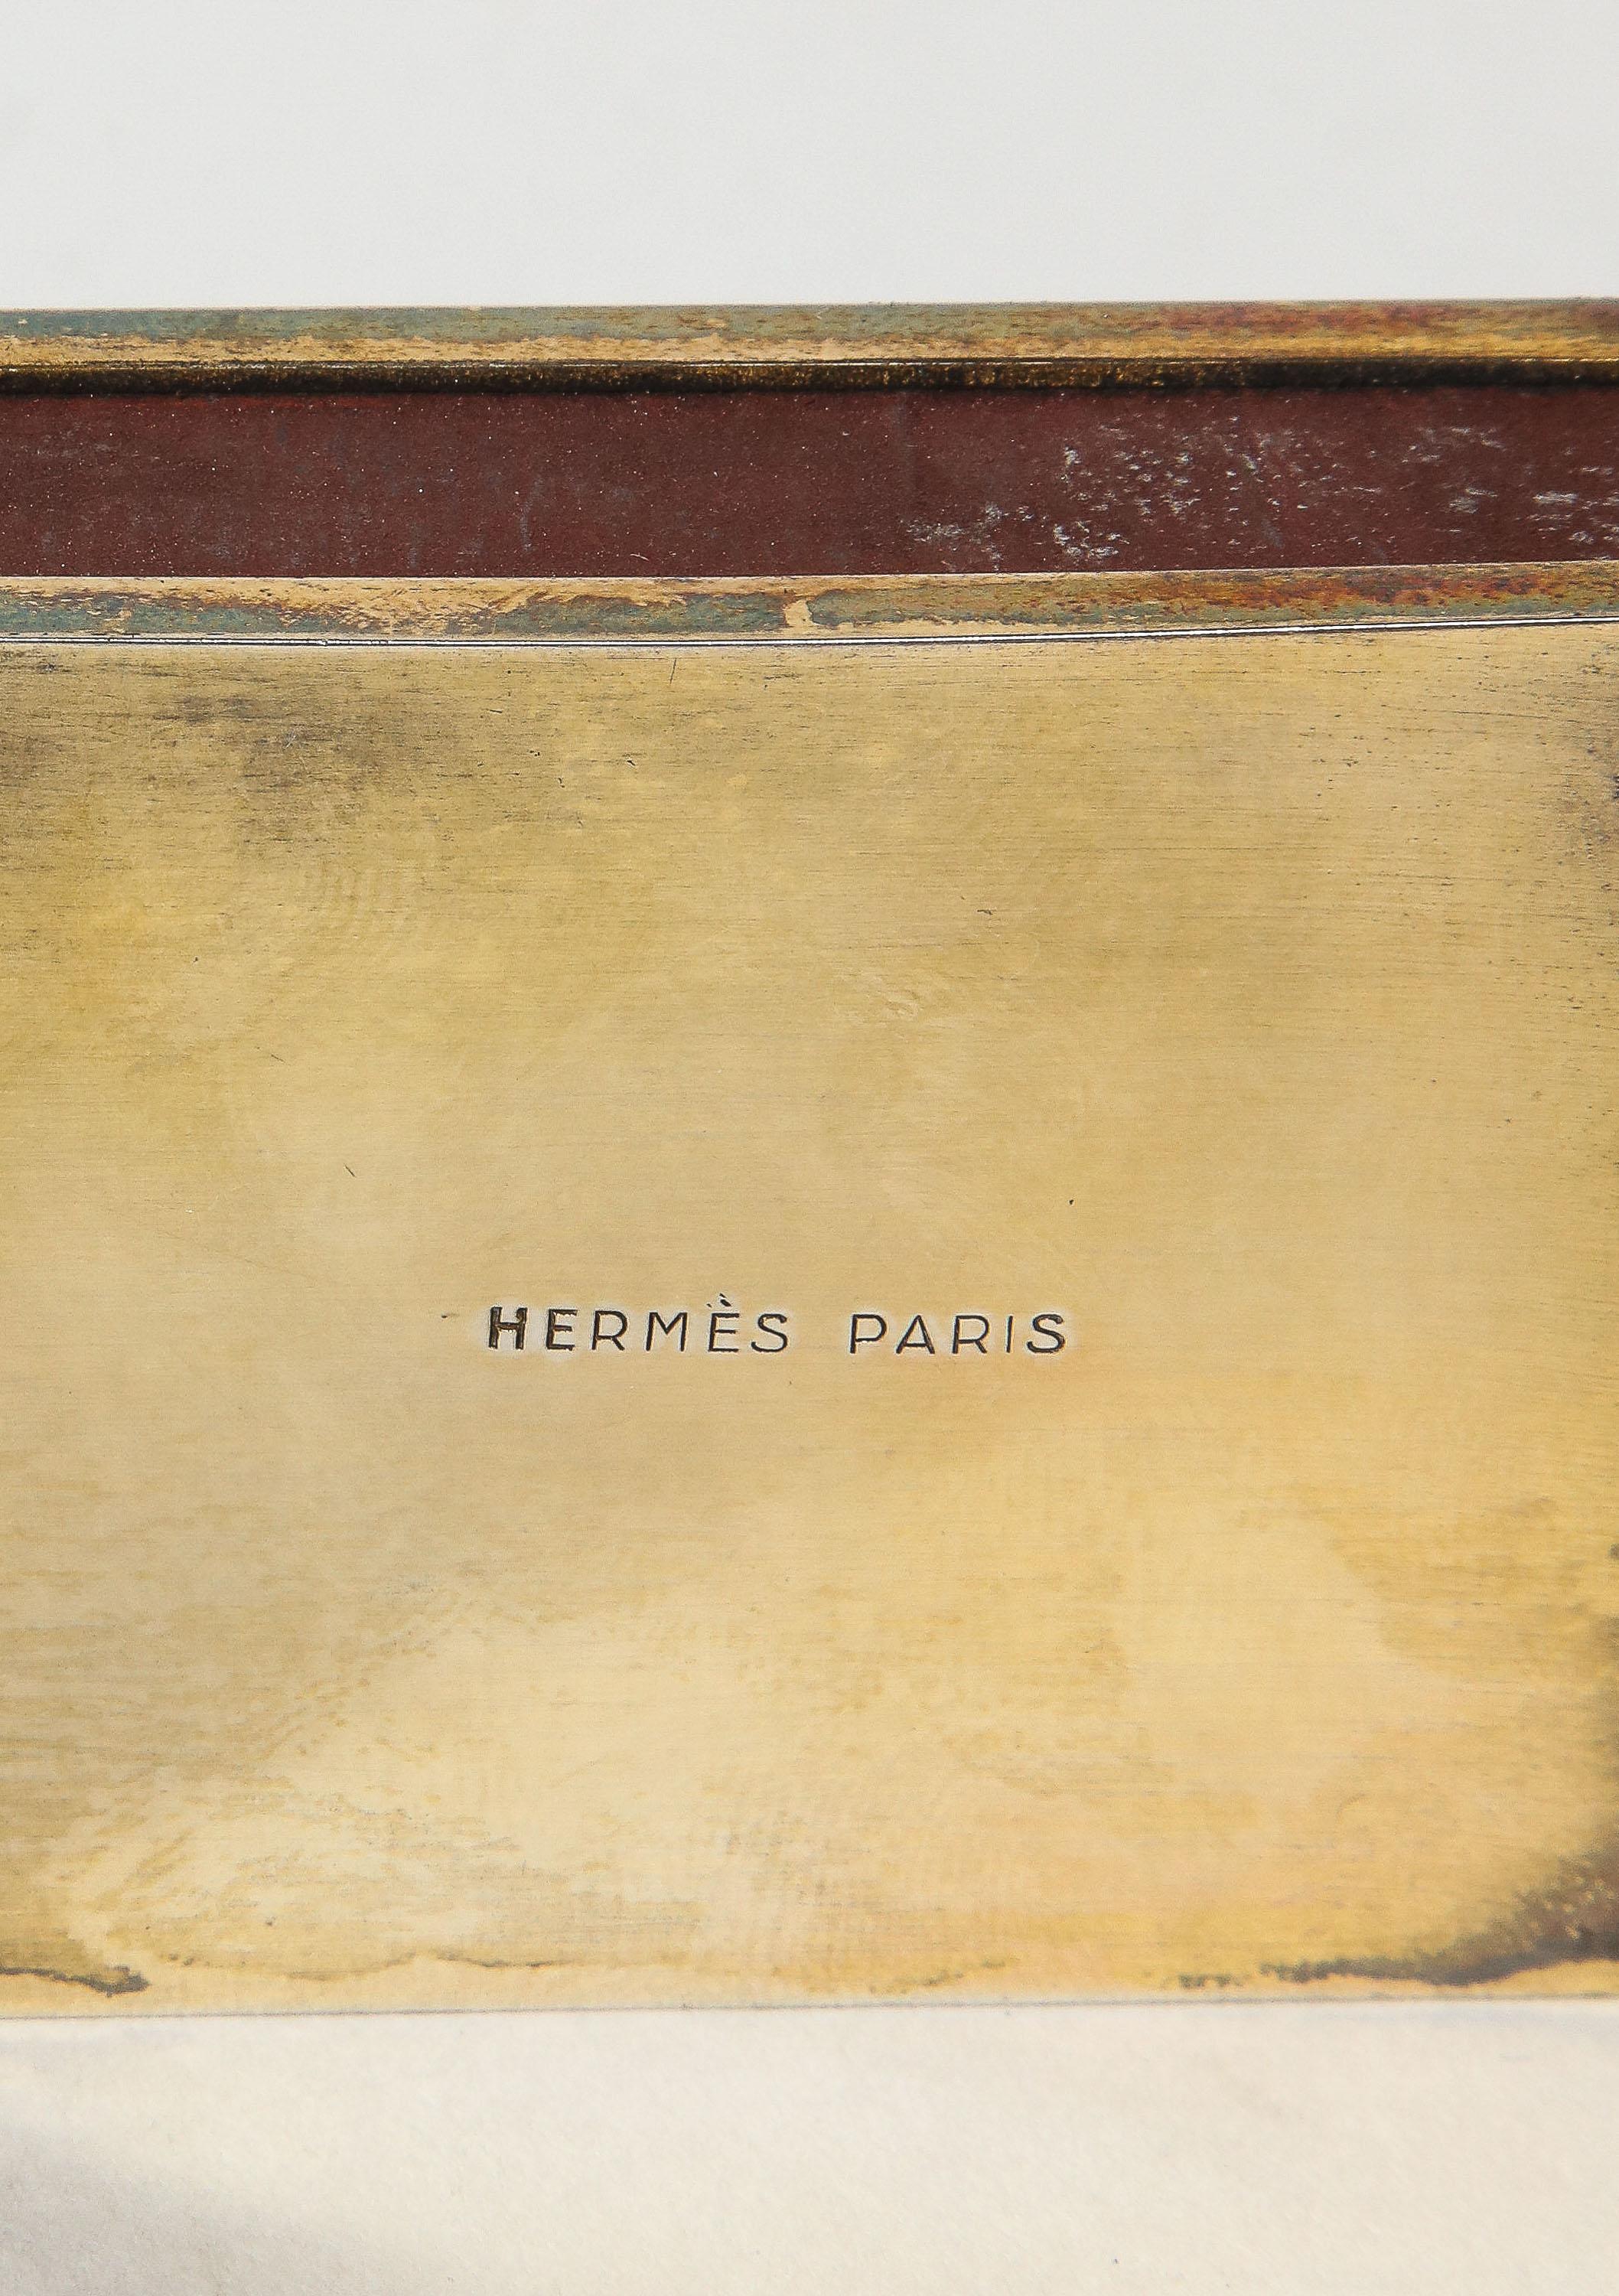 Hermes Paris & Ravinet d'Enfert, a Rare French Silver-Gilt Smoking Set 11